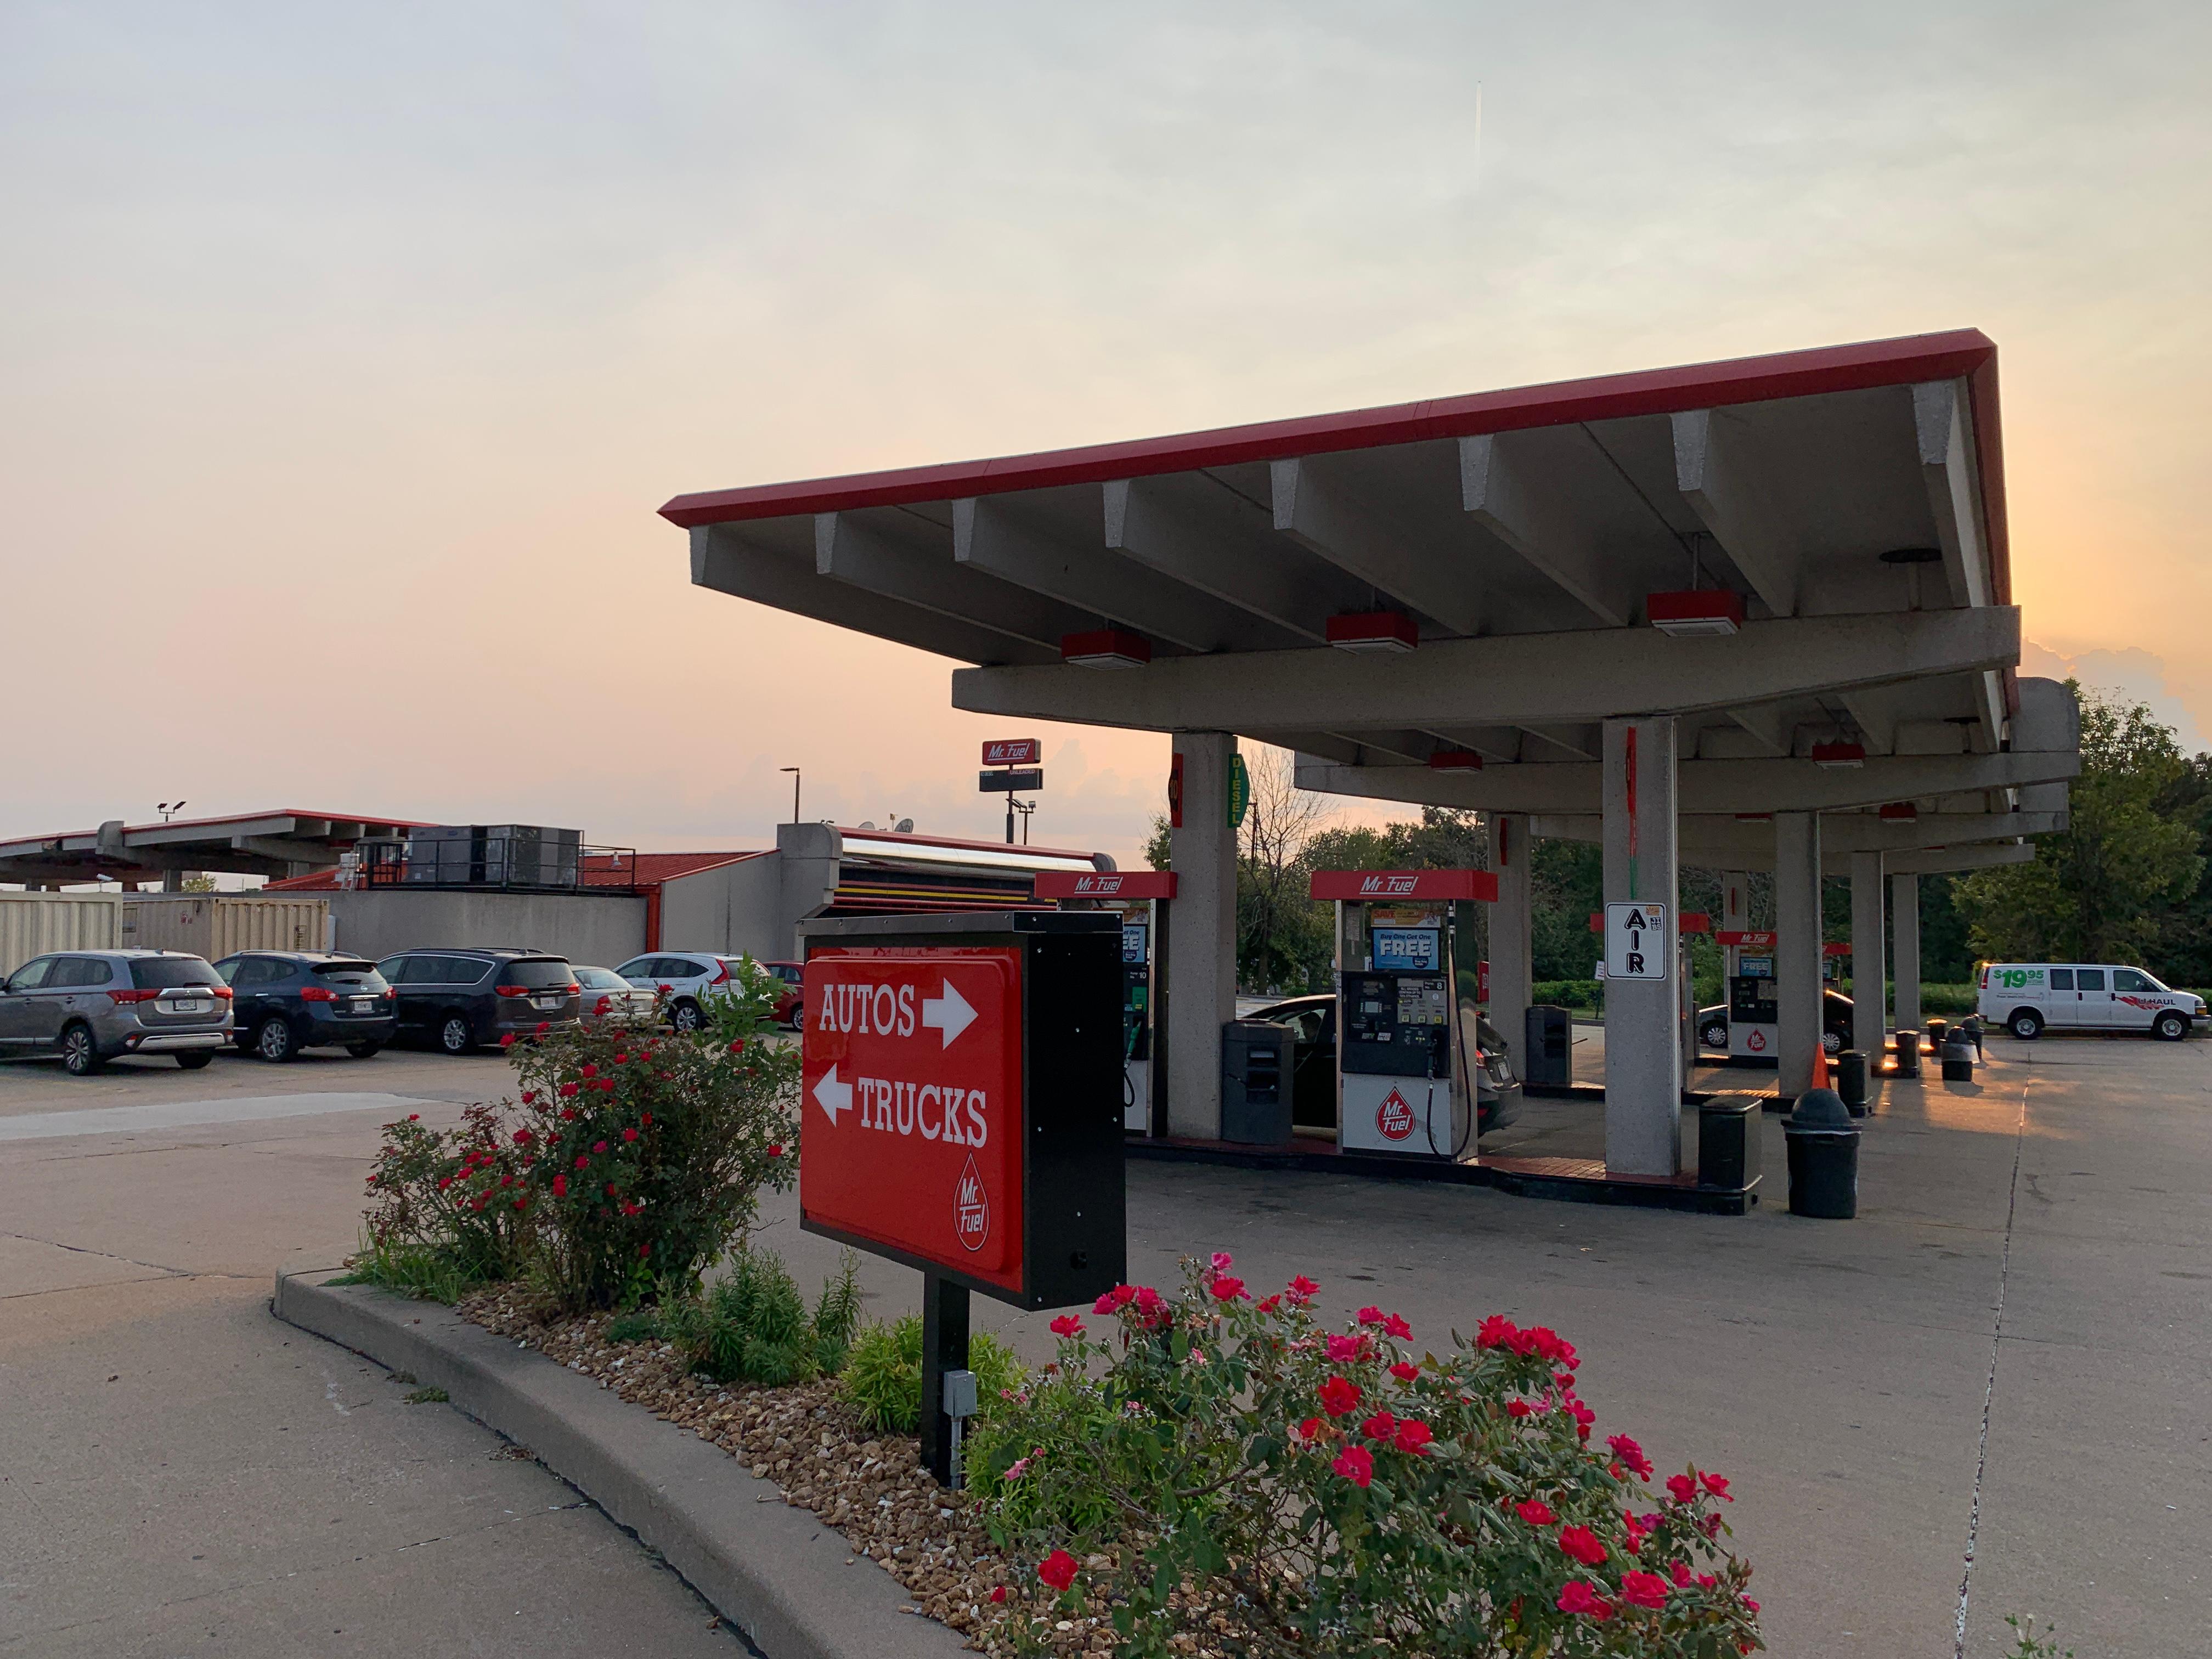 Image 2 | Mr. Fuel Travel Center